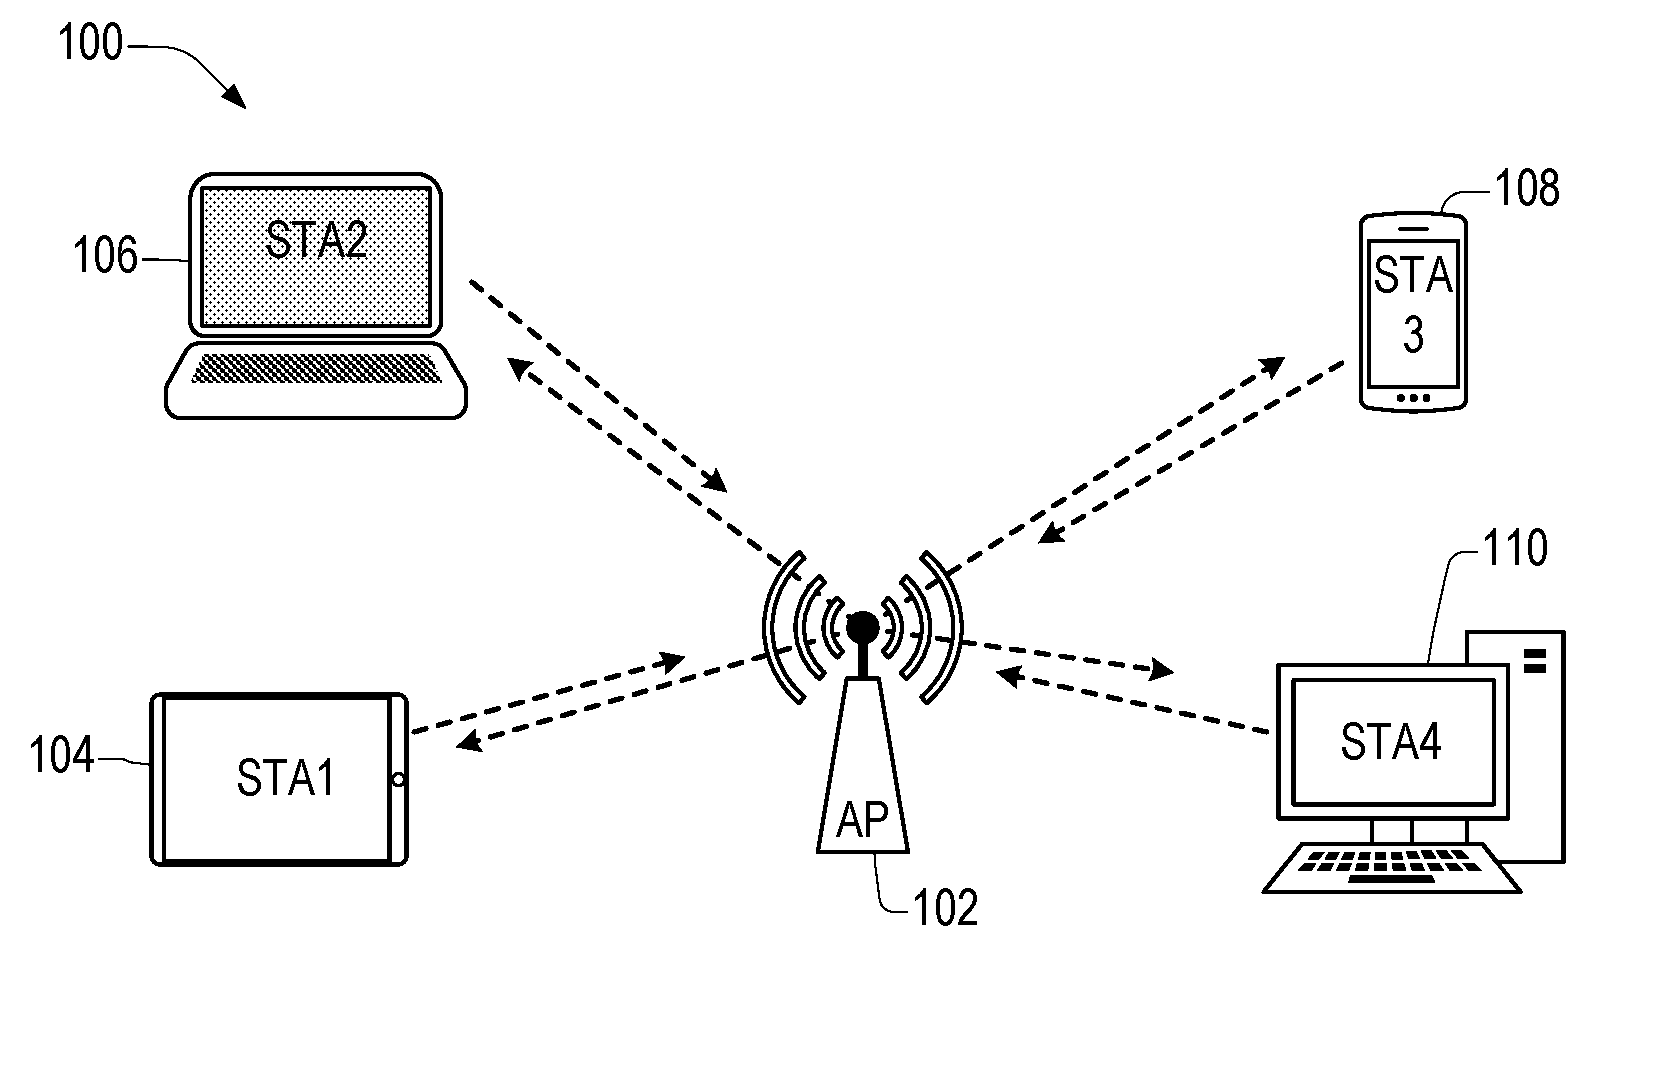 Multi-user communication in wireless networks